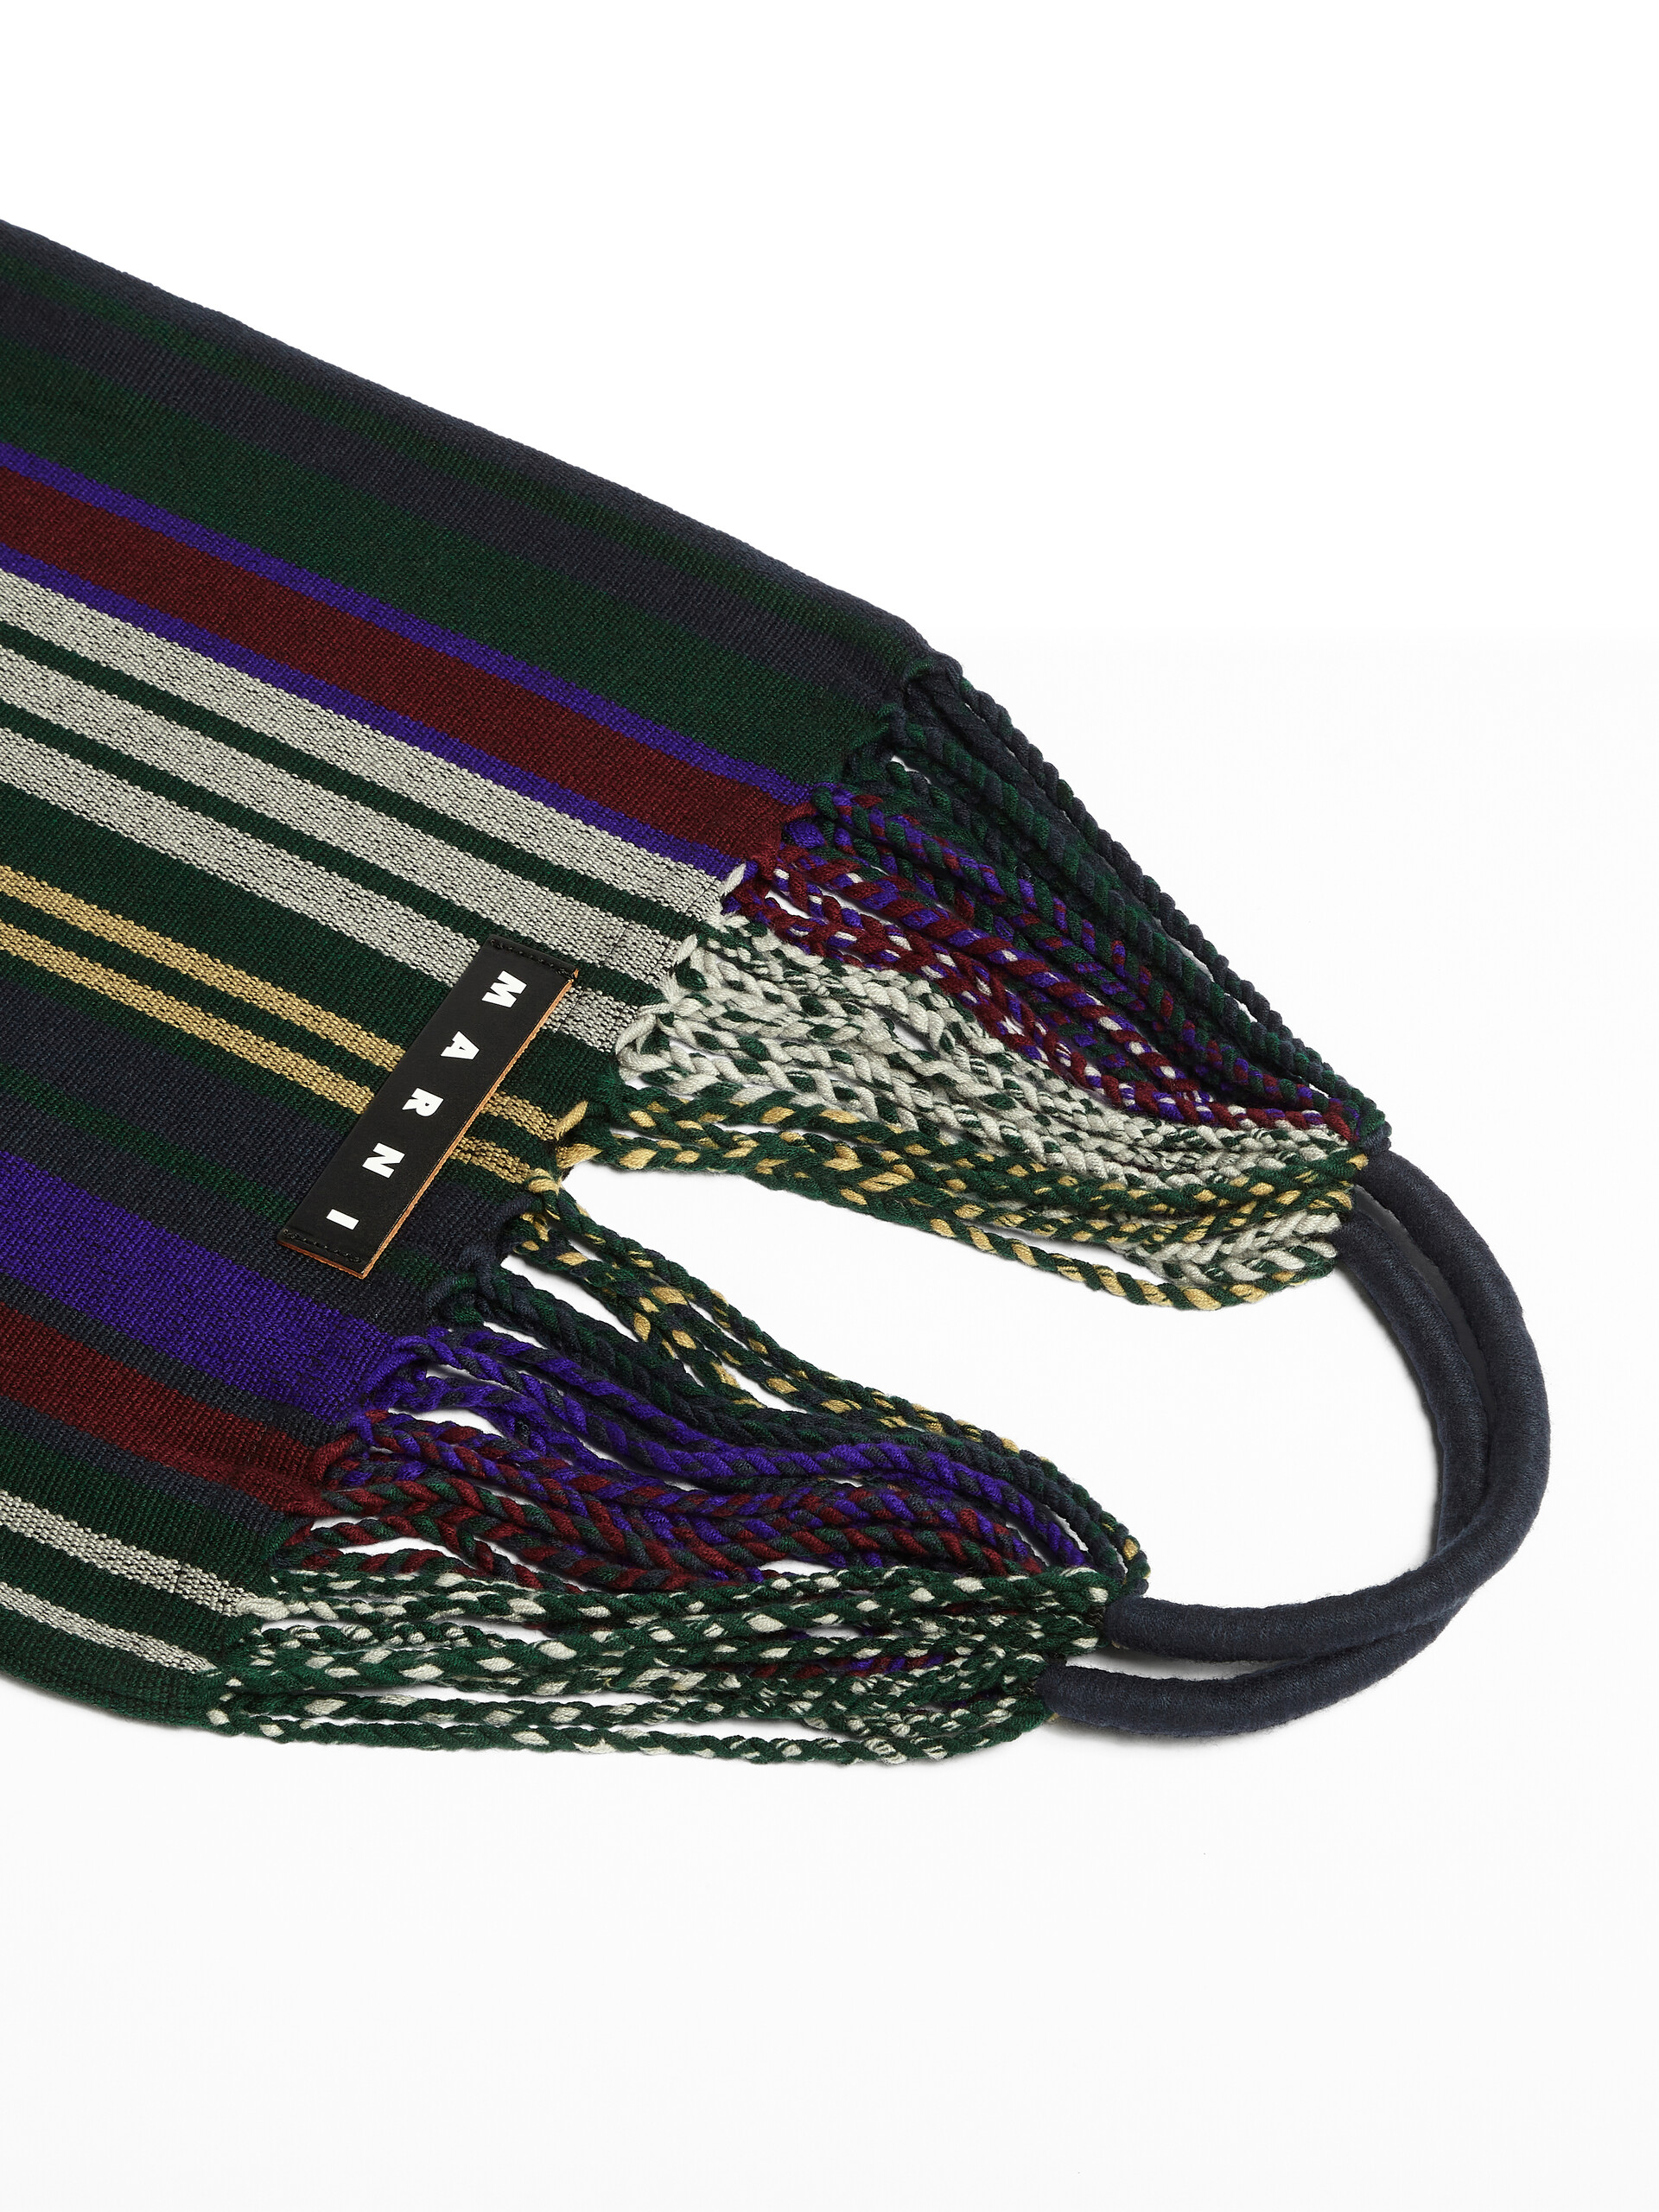 MARNI MARKET HAMMOCK bag in multicolour lilac polyester - Bags - Image 4